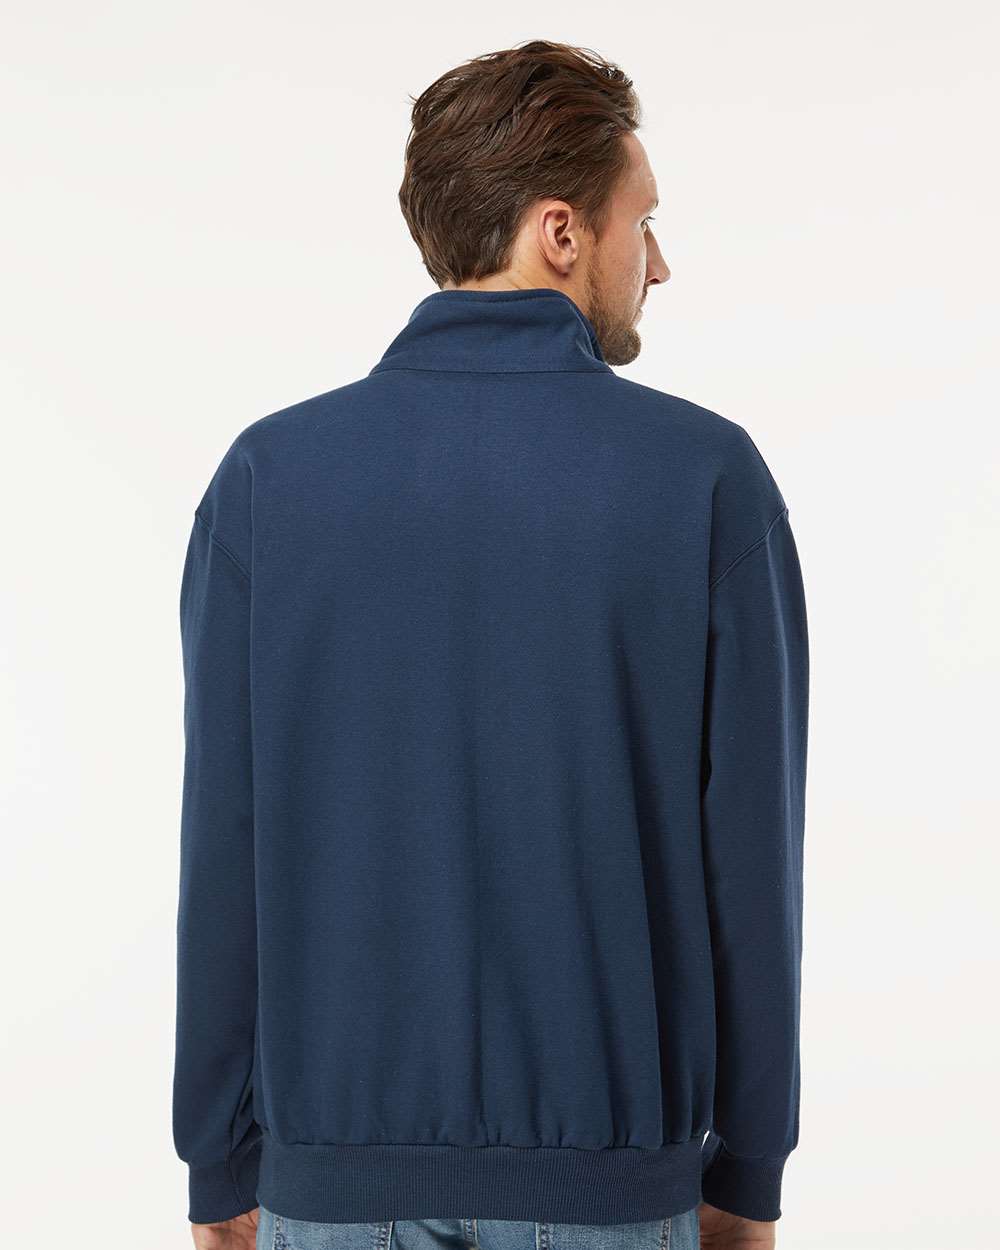 King Fashion Full-Zip Sweatshirt KF9016 #colormdl_Navy